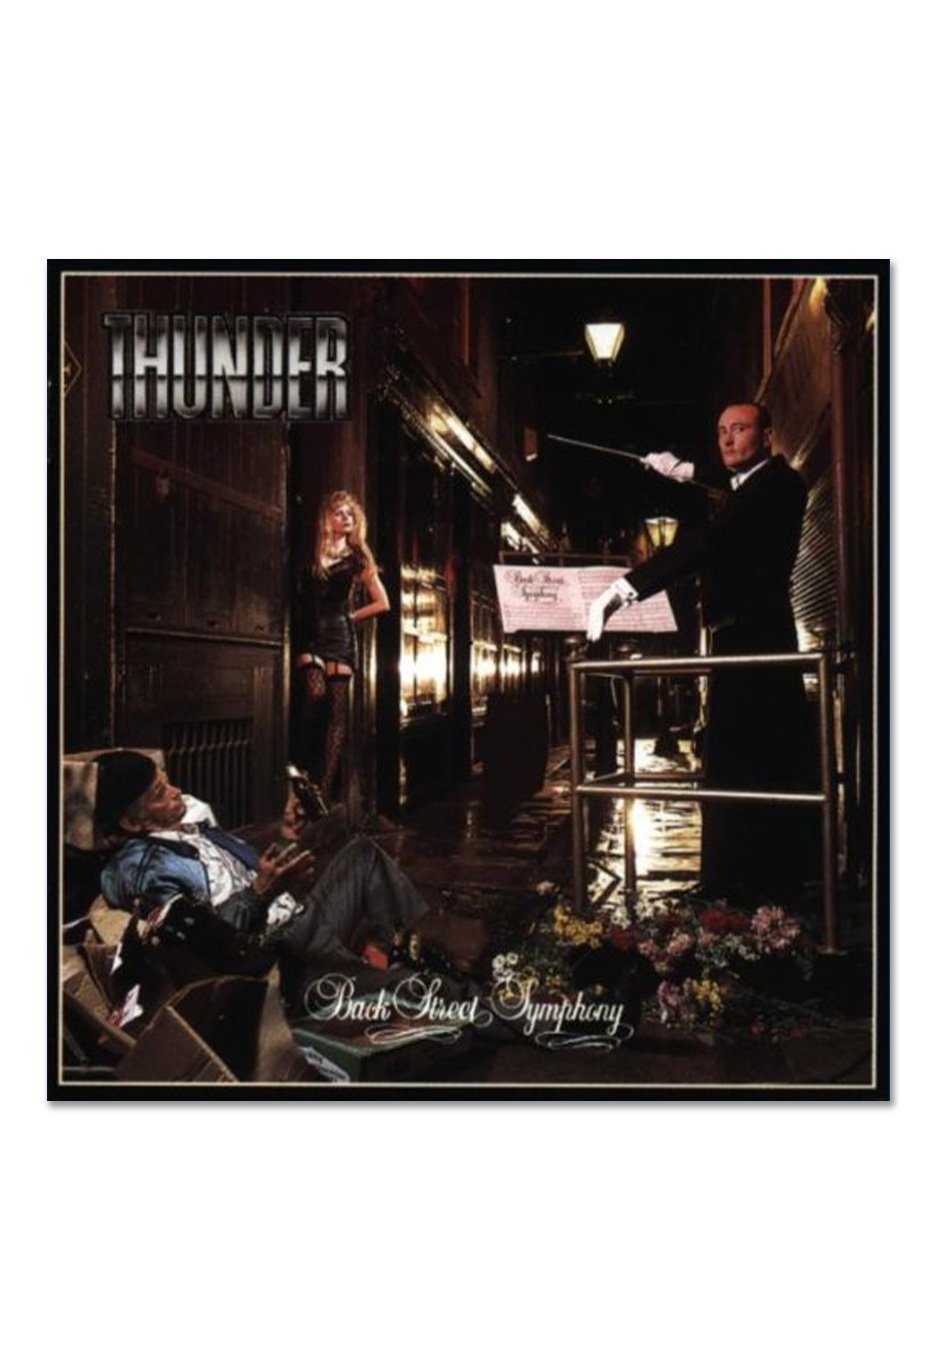 Thunder - Backstreet Symphony (Expanded Version) - Digipak CD